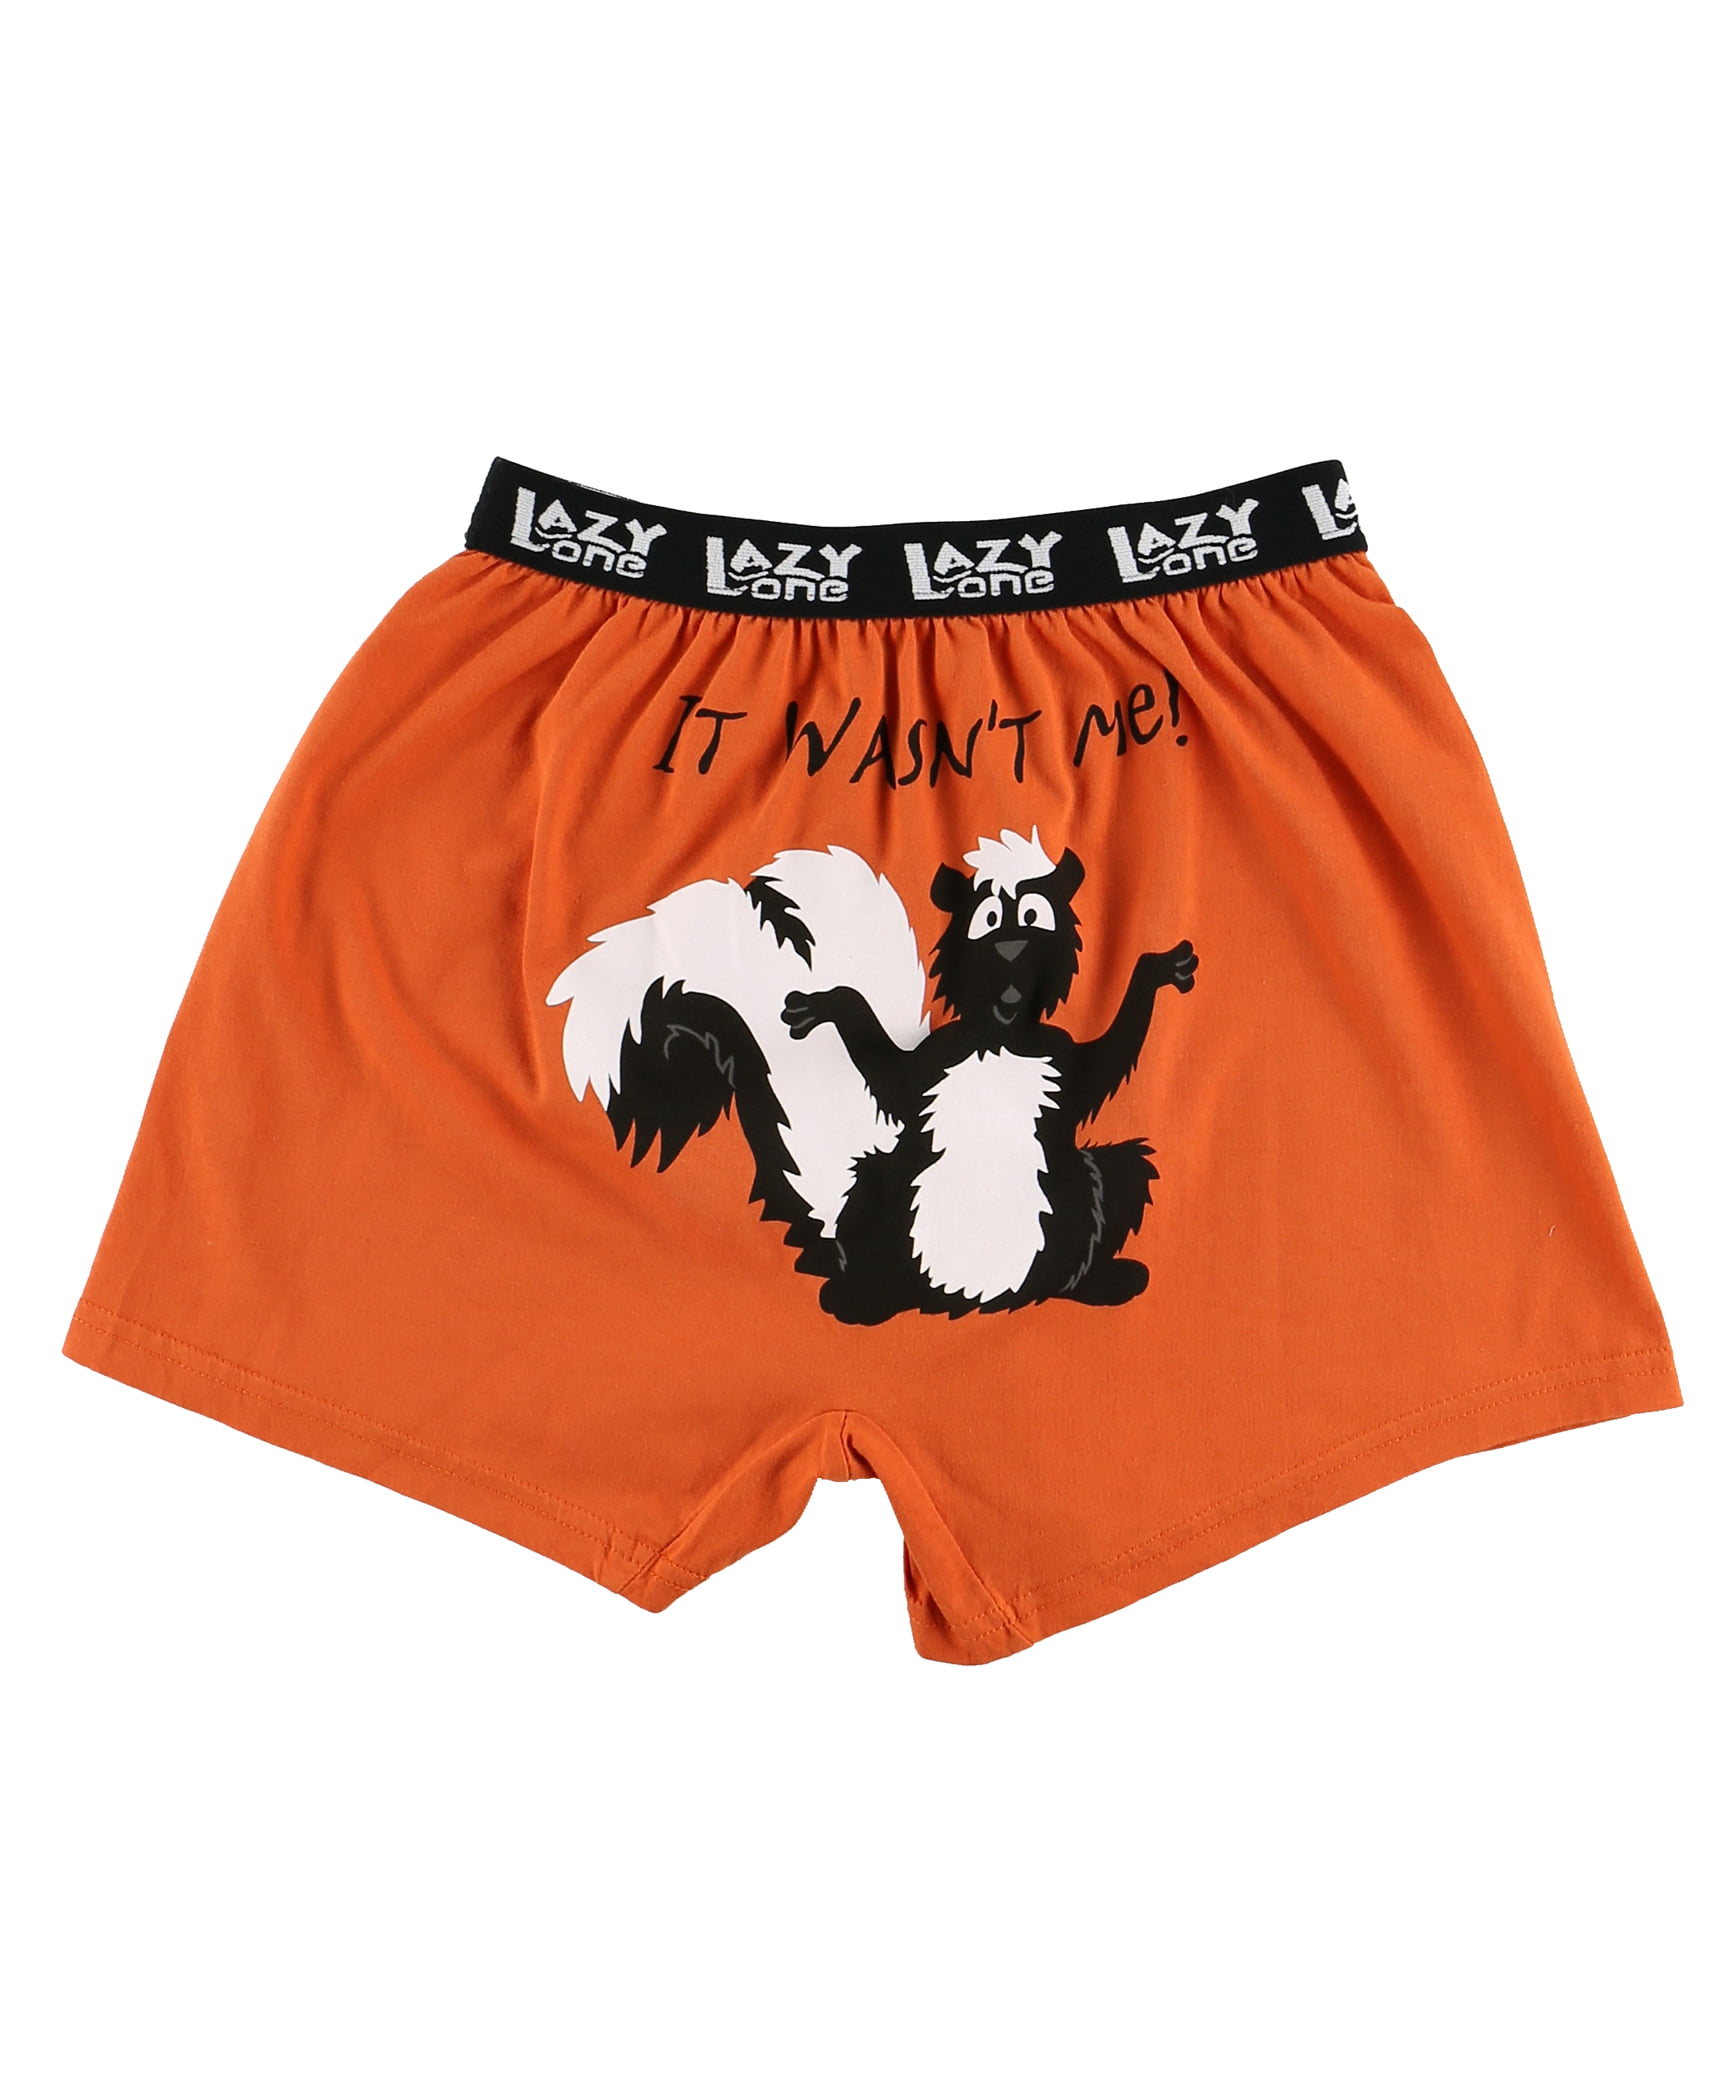 Animal Pun Joke Underwear for Guys Soft Comical Boxers for Men by LazyOne 